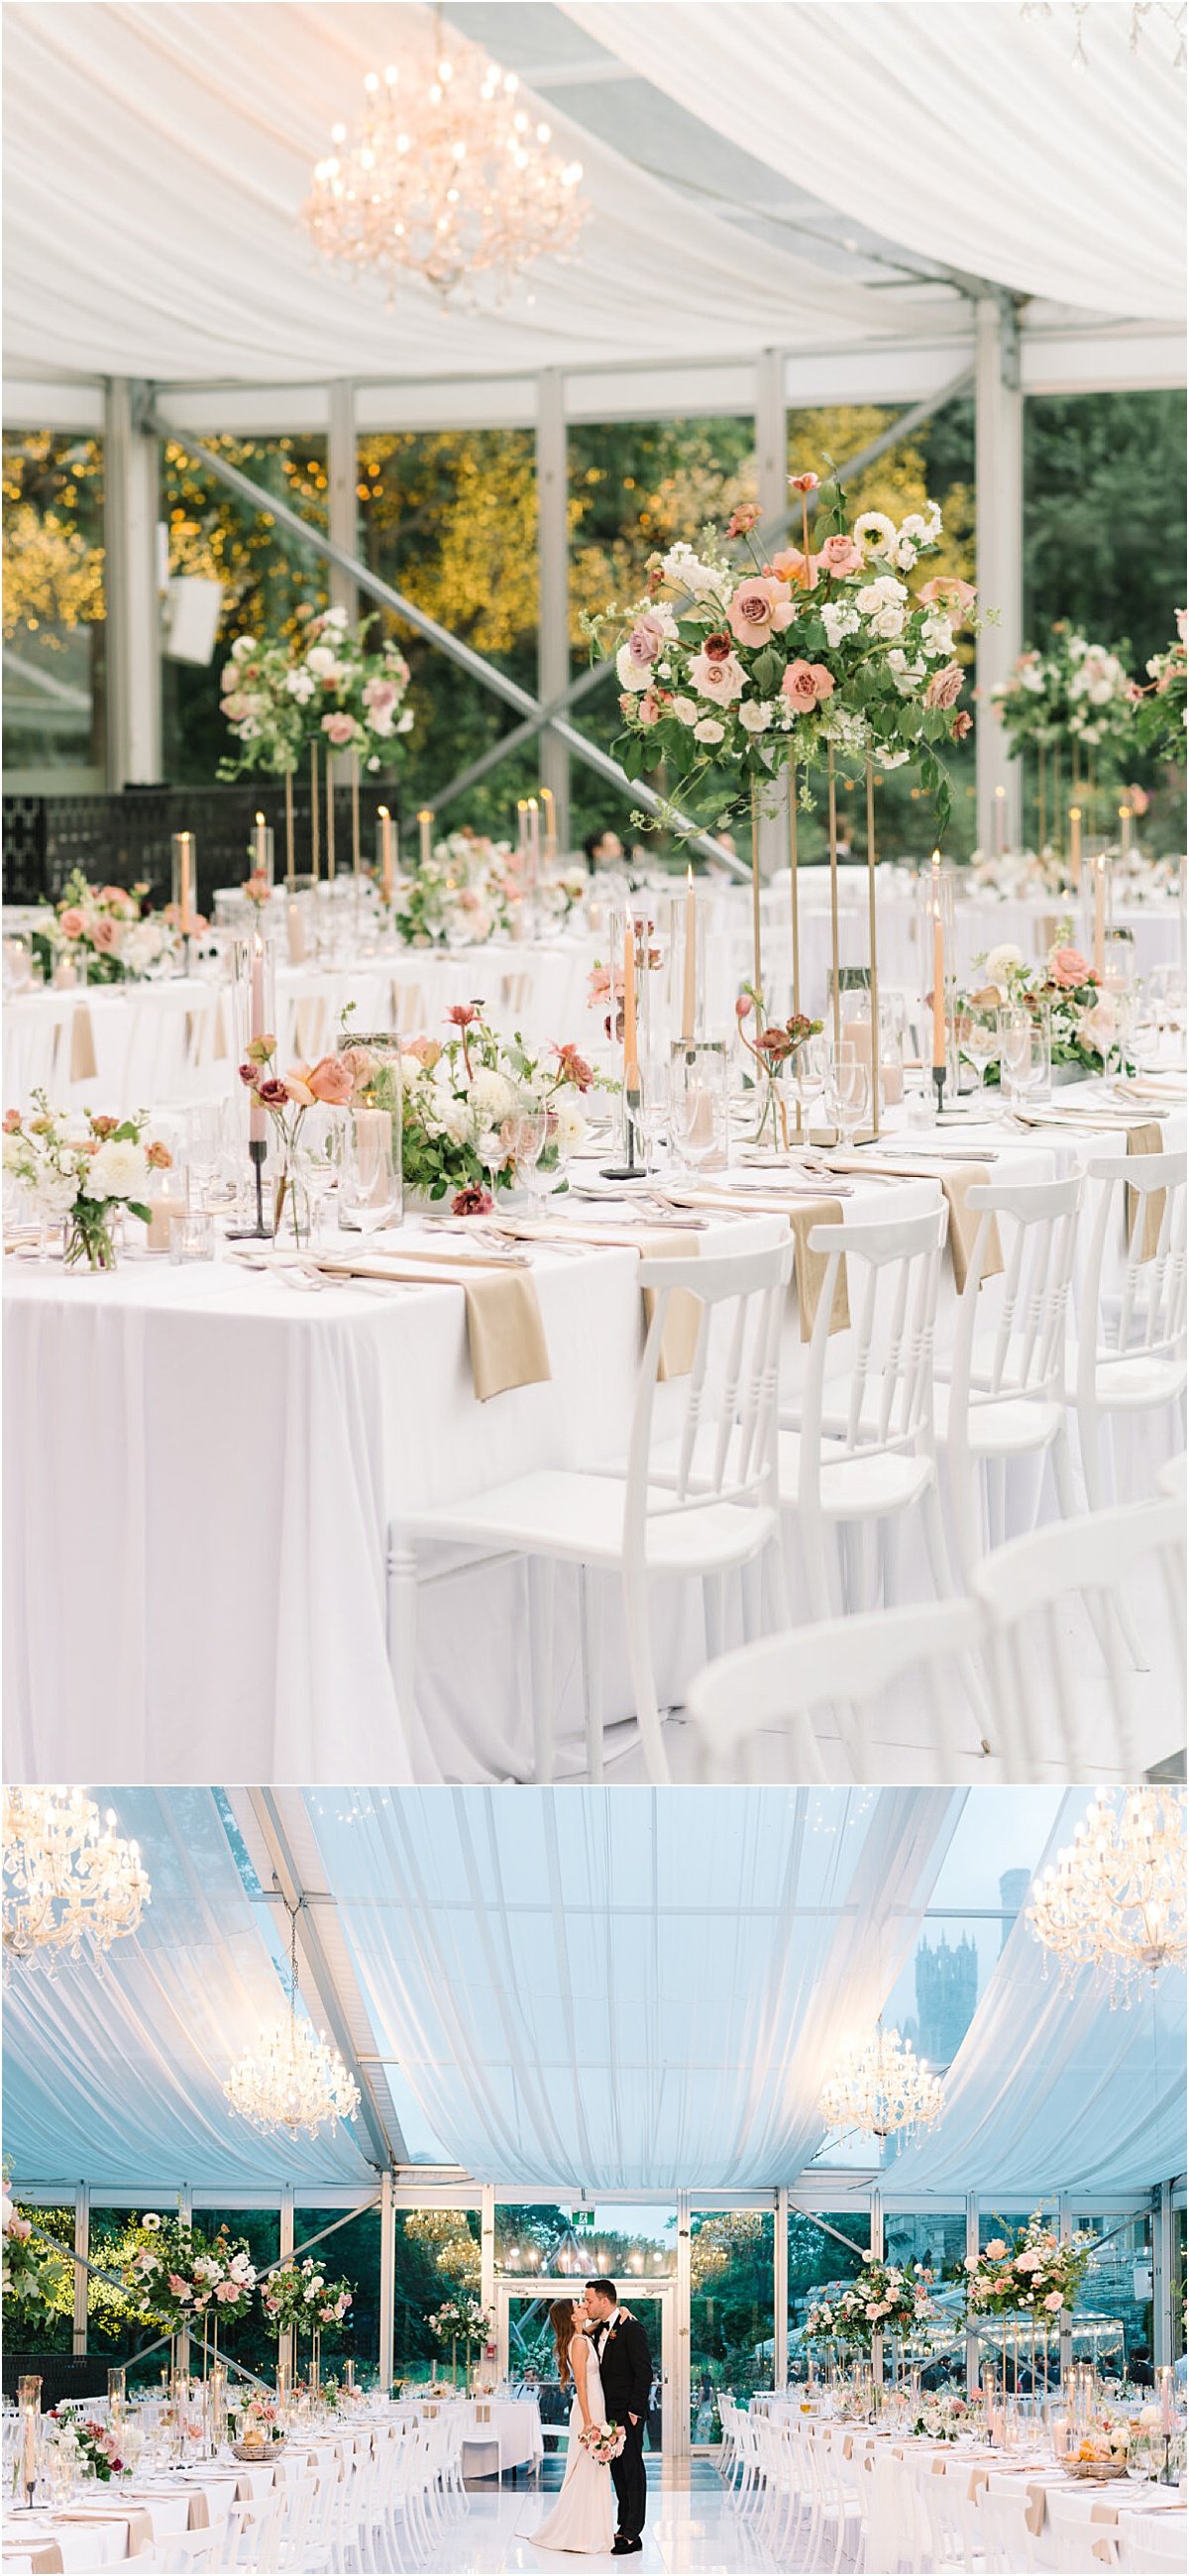 Casa-Loma-Glass-Pavilion-Wedding-Toronto-Planner-Laura-Olsen-Events-24.jpg